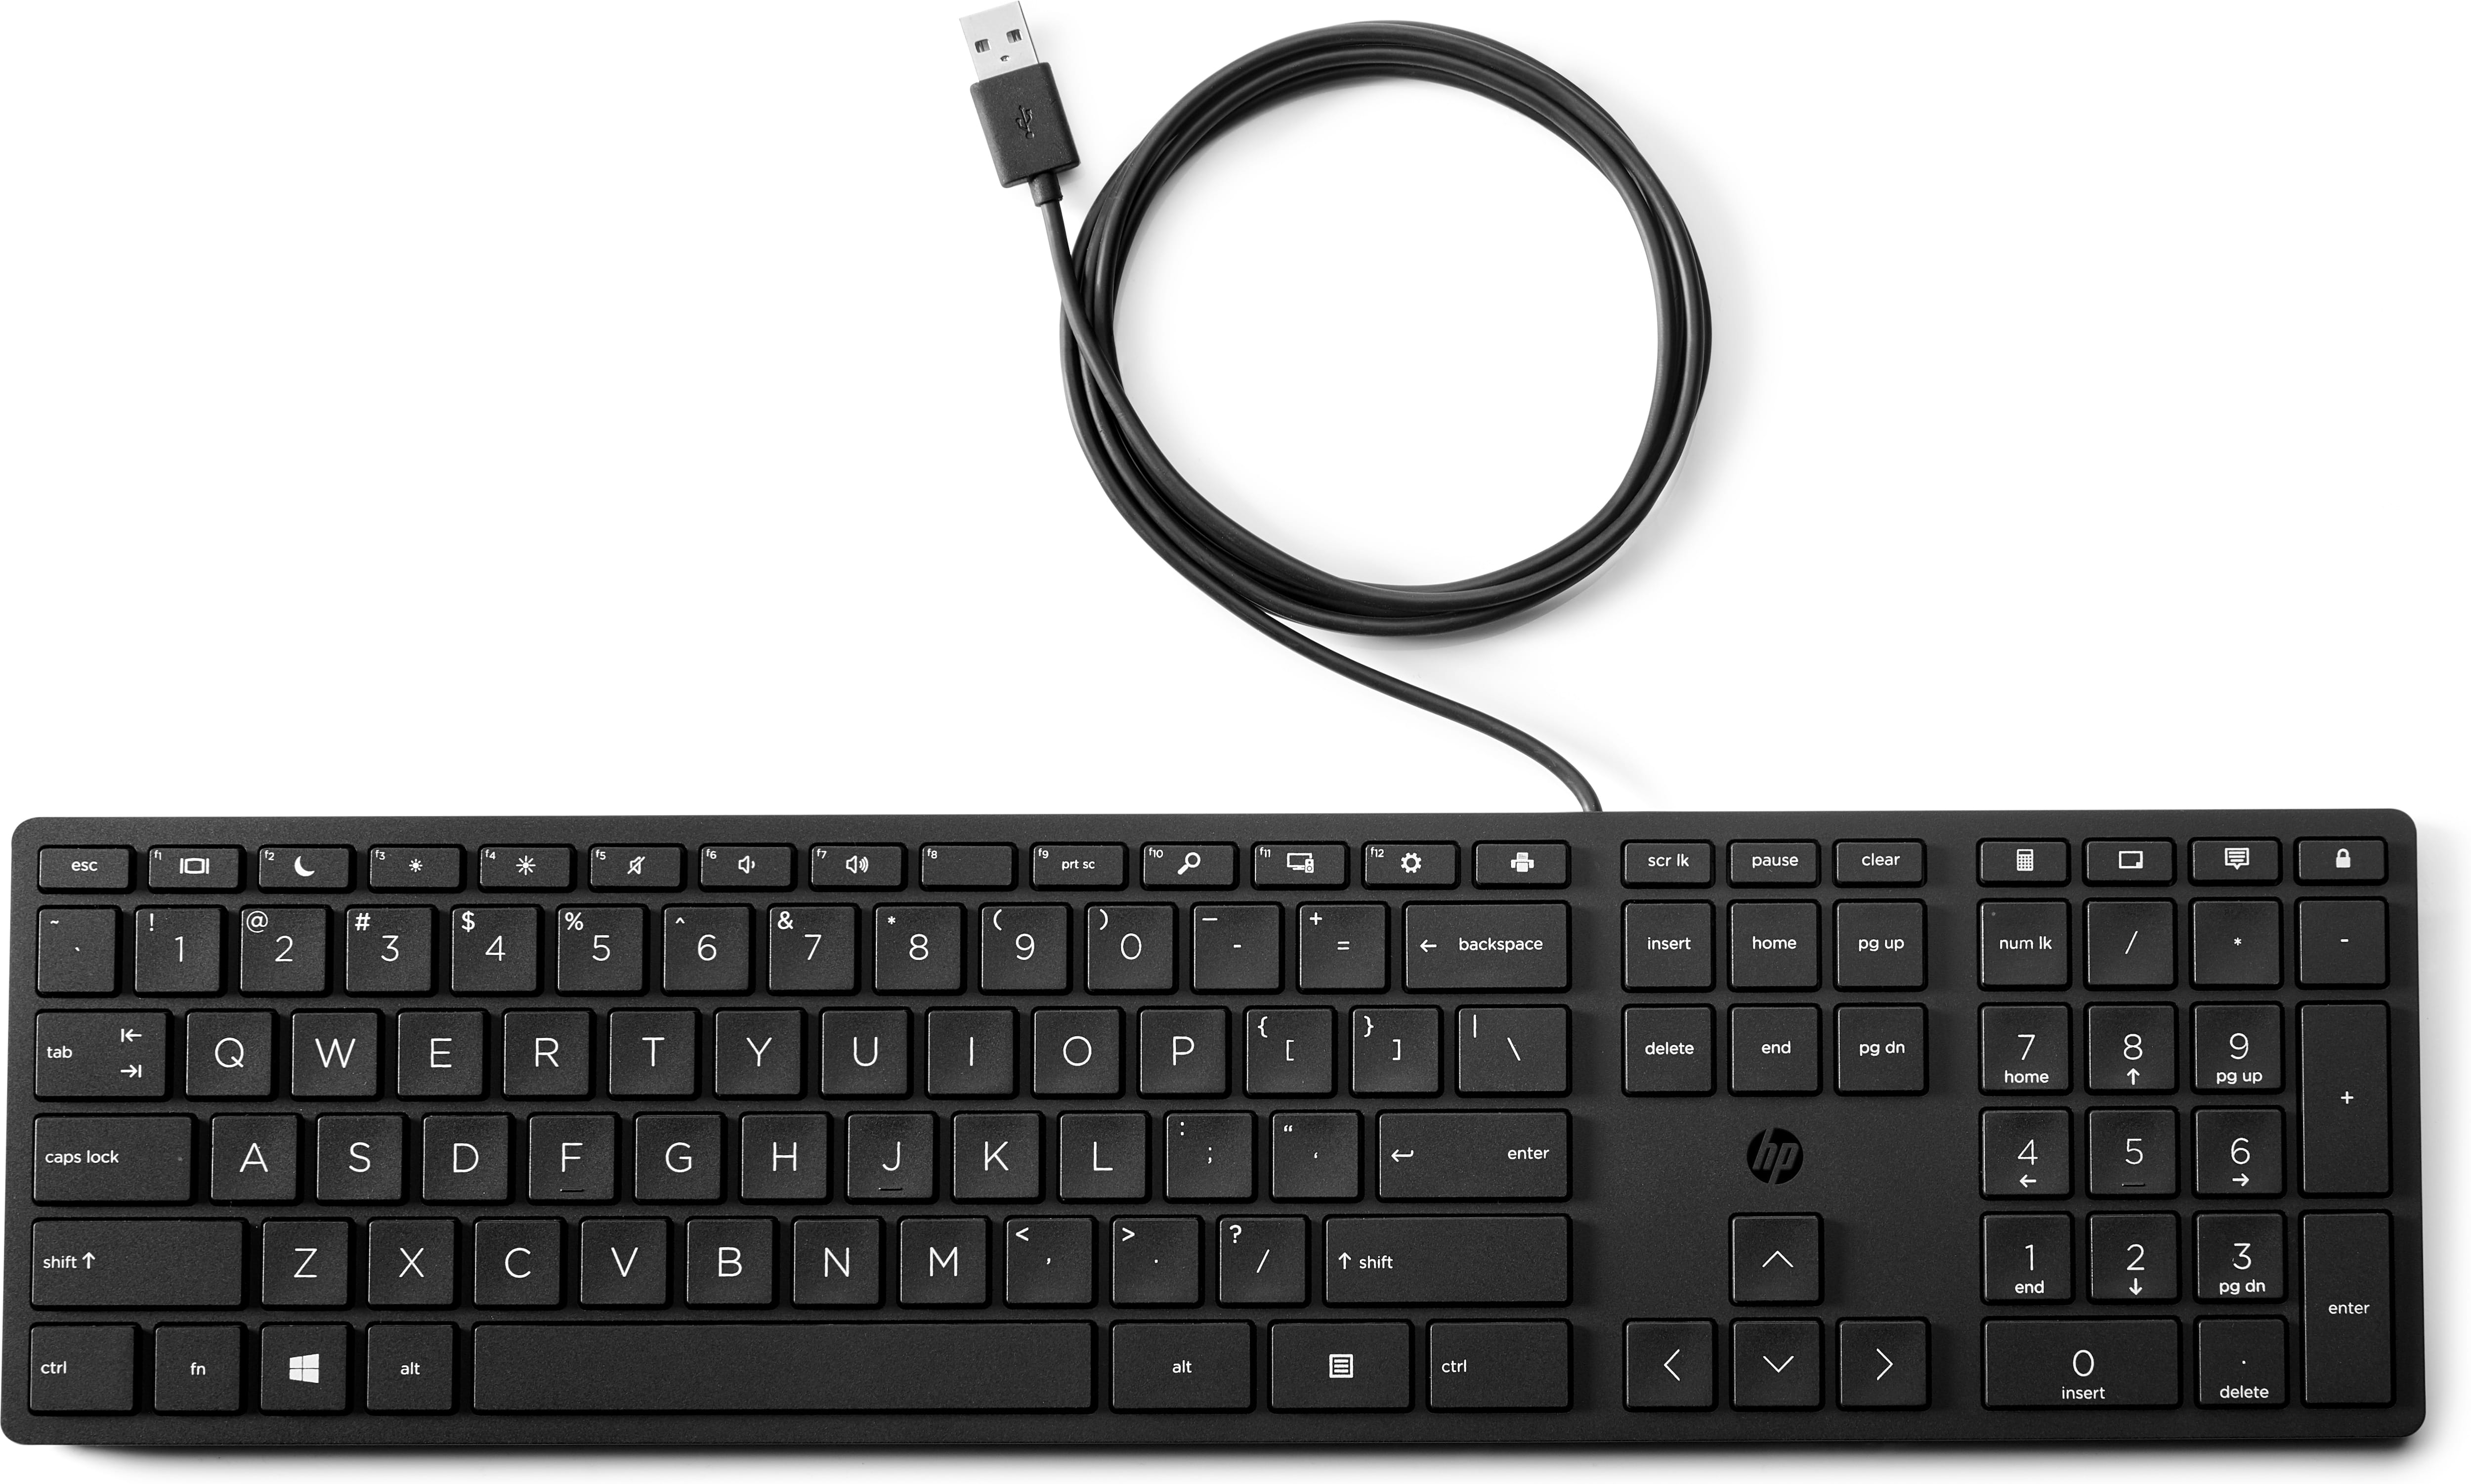 HP Desktop 320K - Tastatur - USB - QWERTY - Englisch